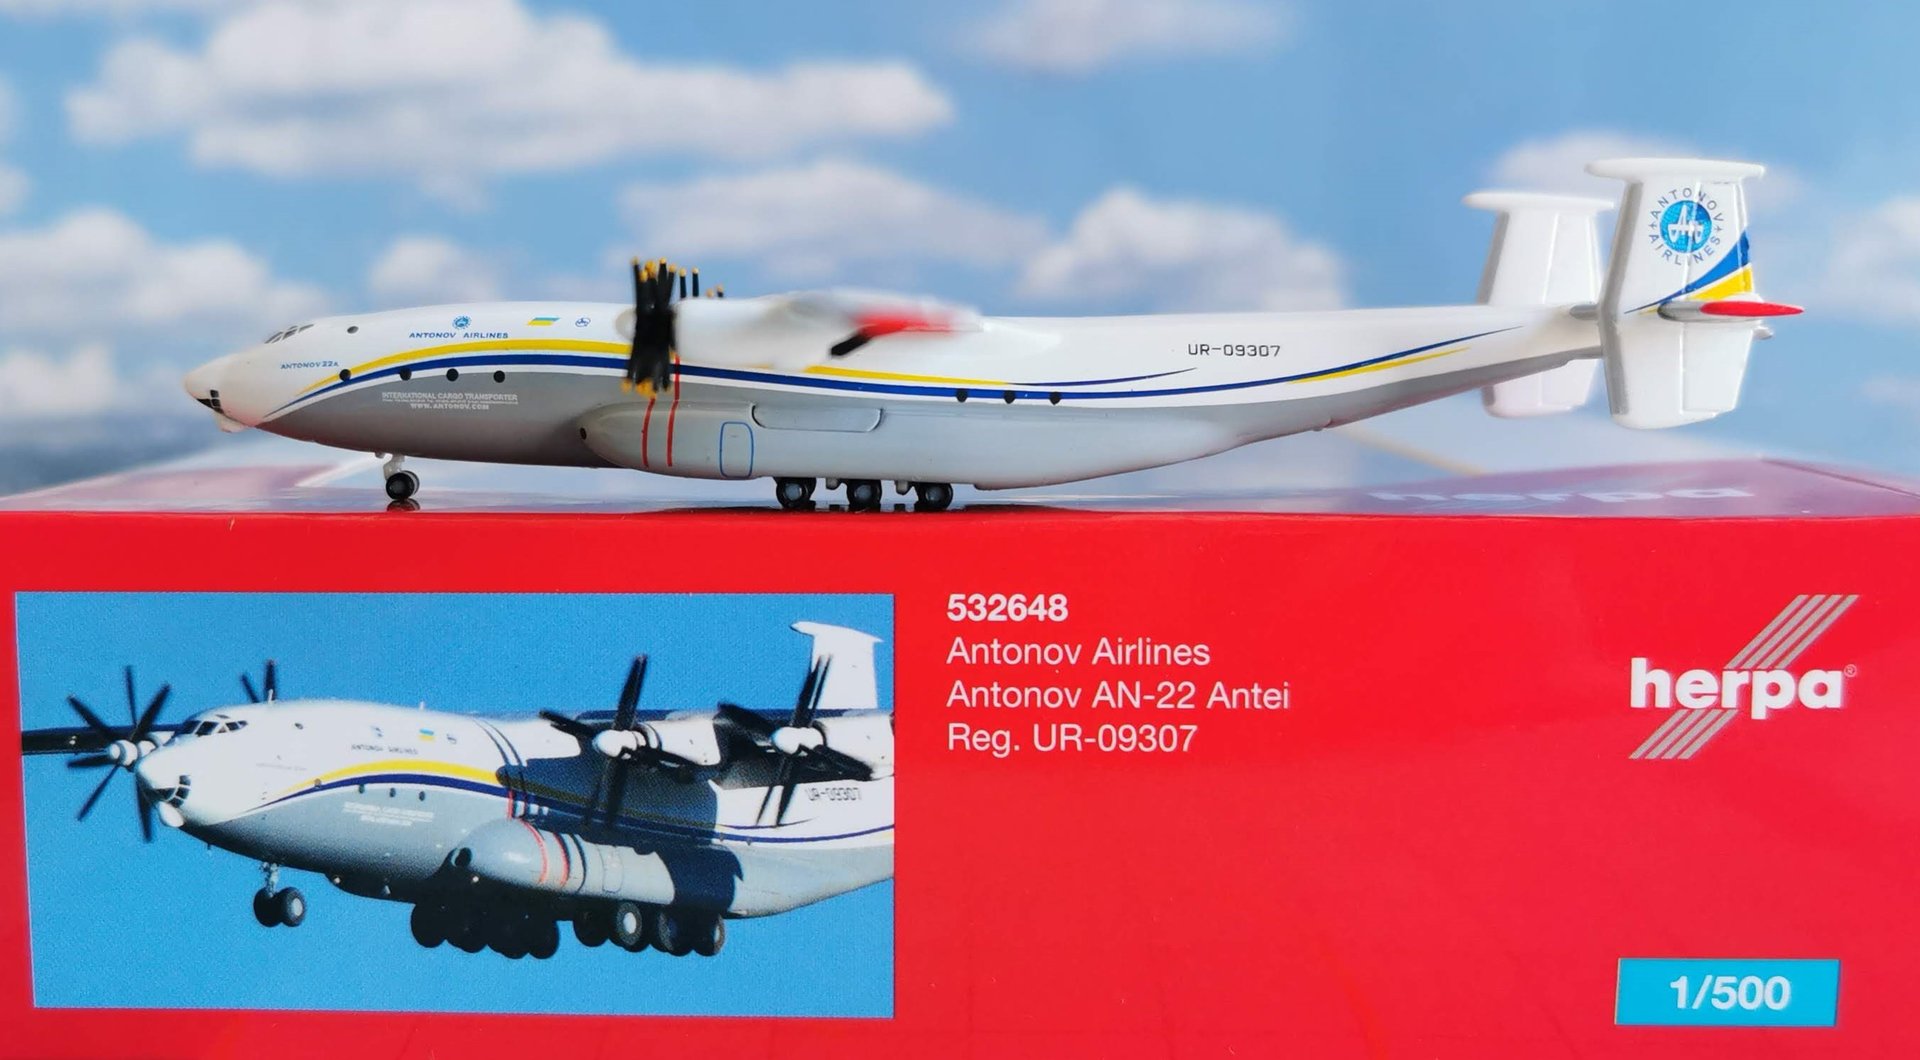 Herpa 532648-1/500 Antonov Airlines Antonov an-22 proportion-Neuf 